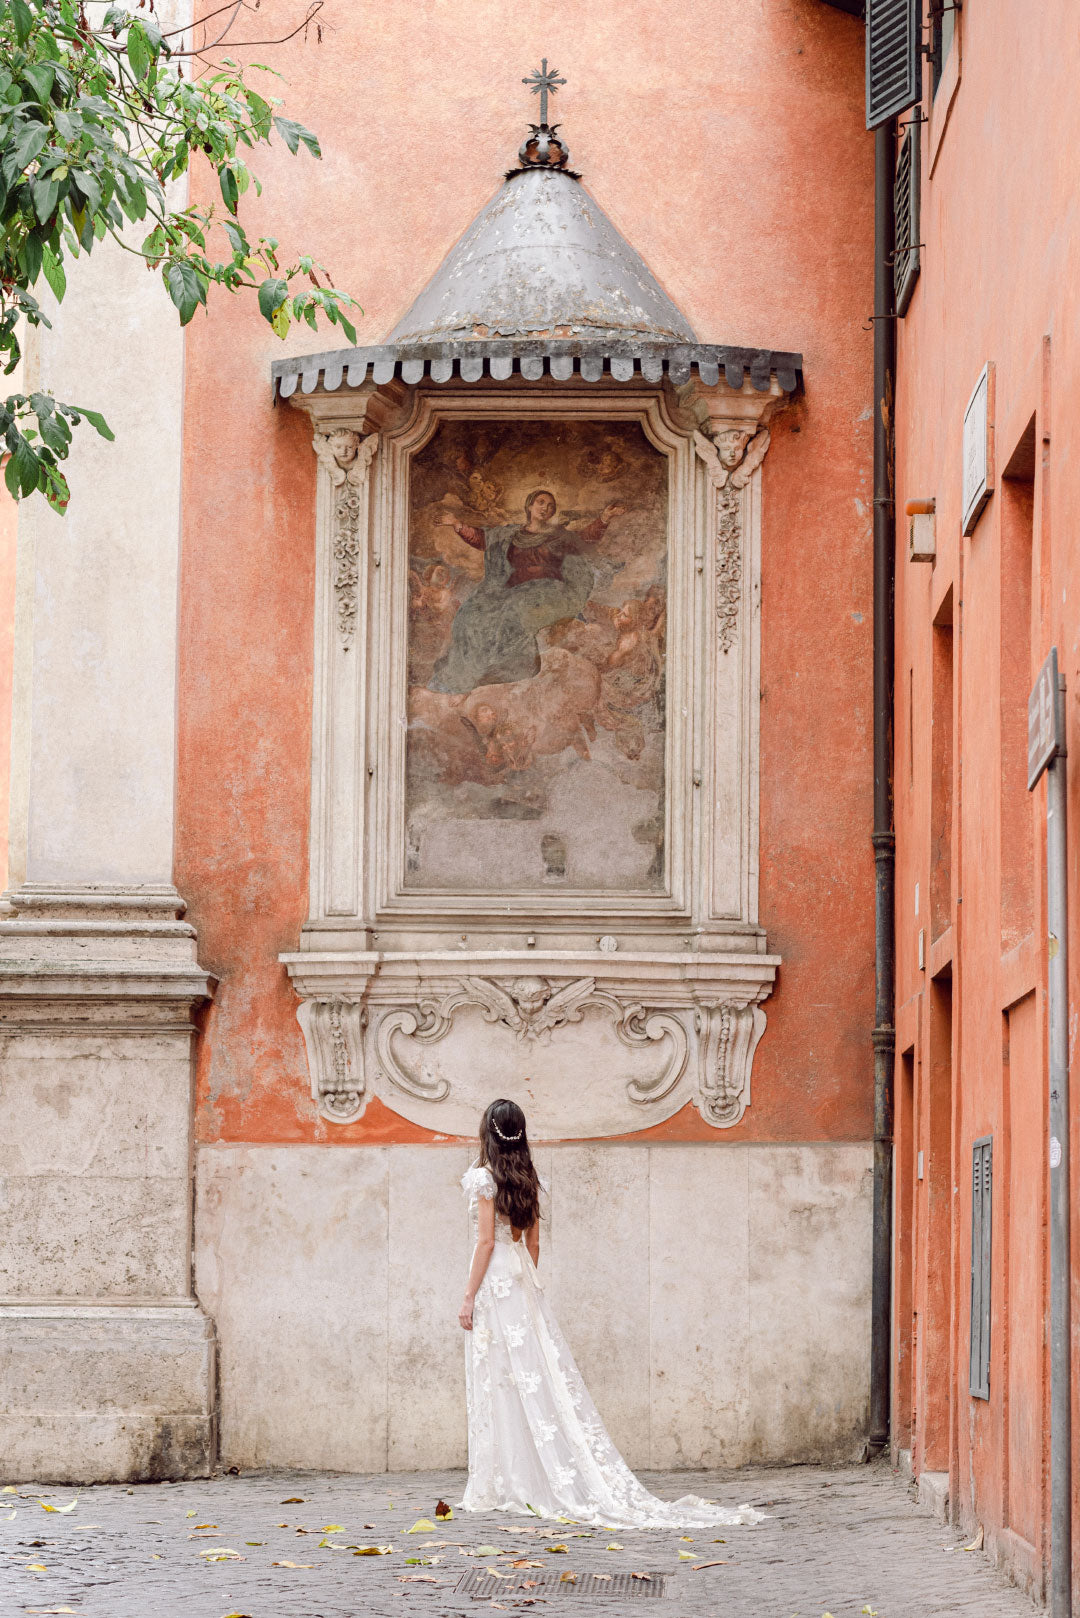 Bride in Wedding dress view Renaisance frescoe in Italy